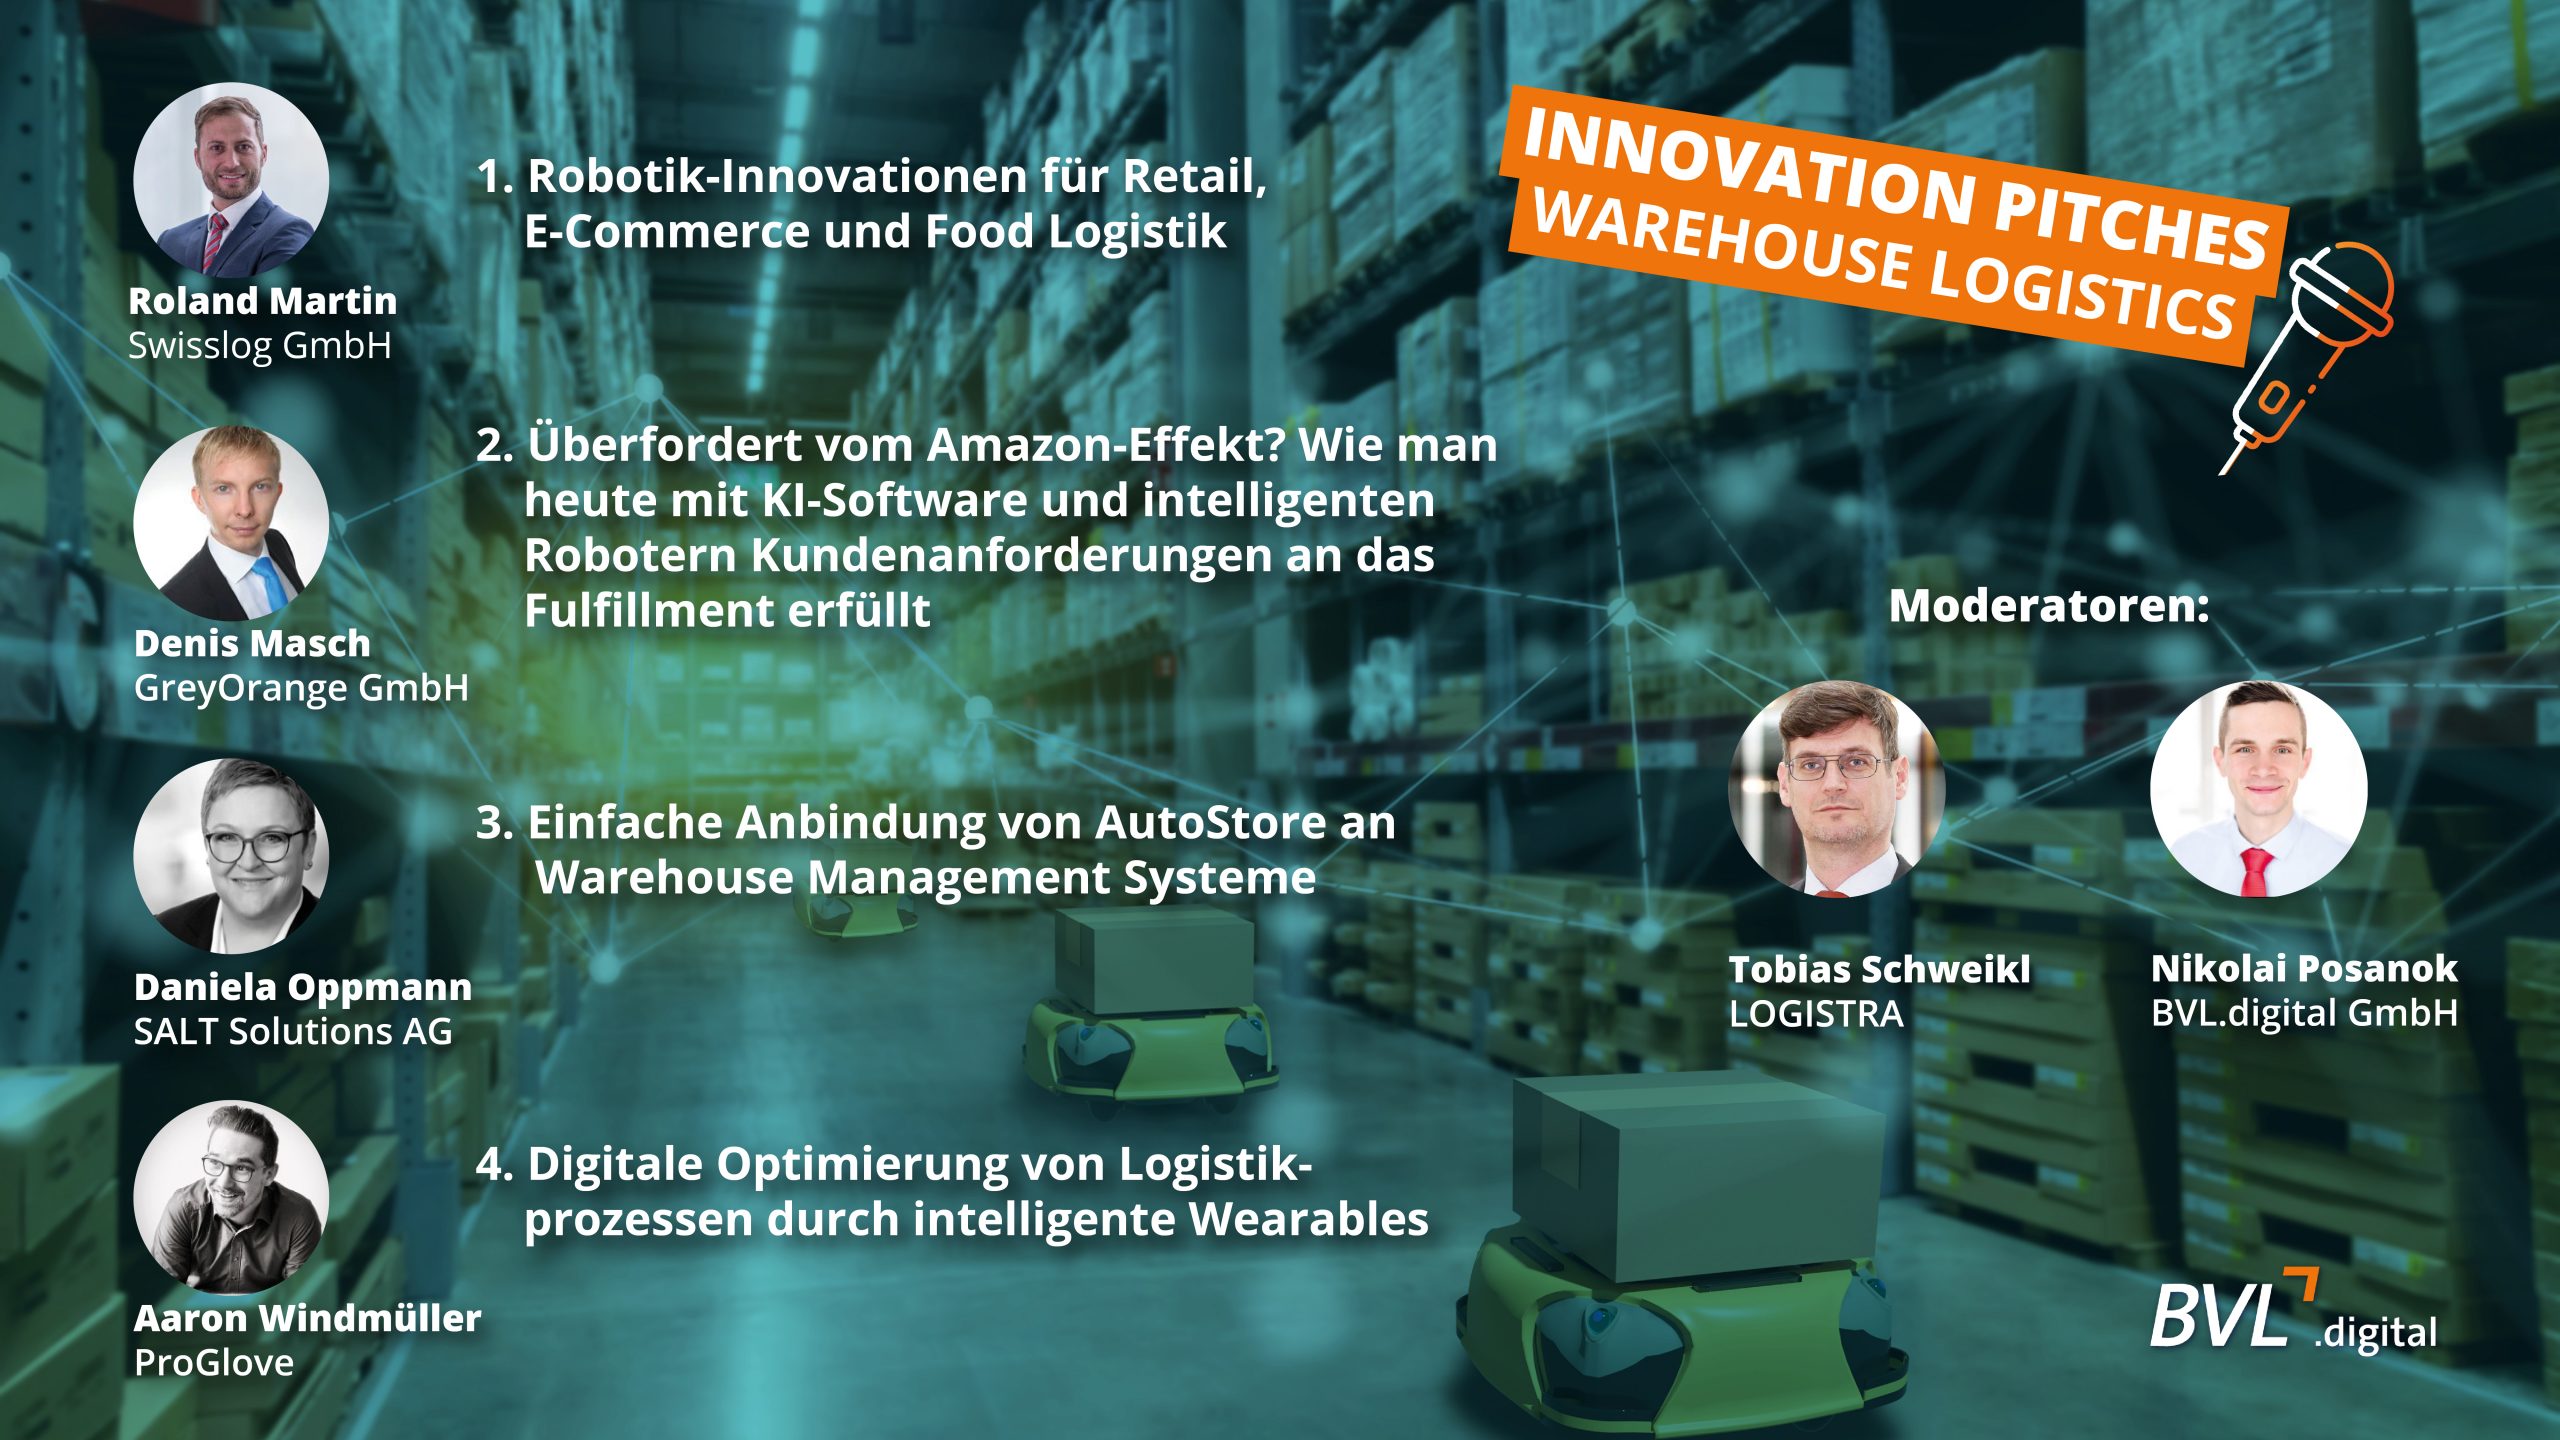 Innovation Pitches – Warehouse Logistics